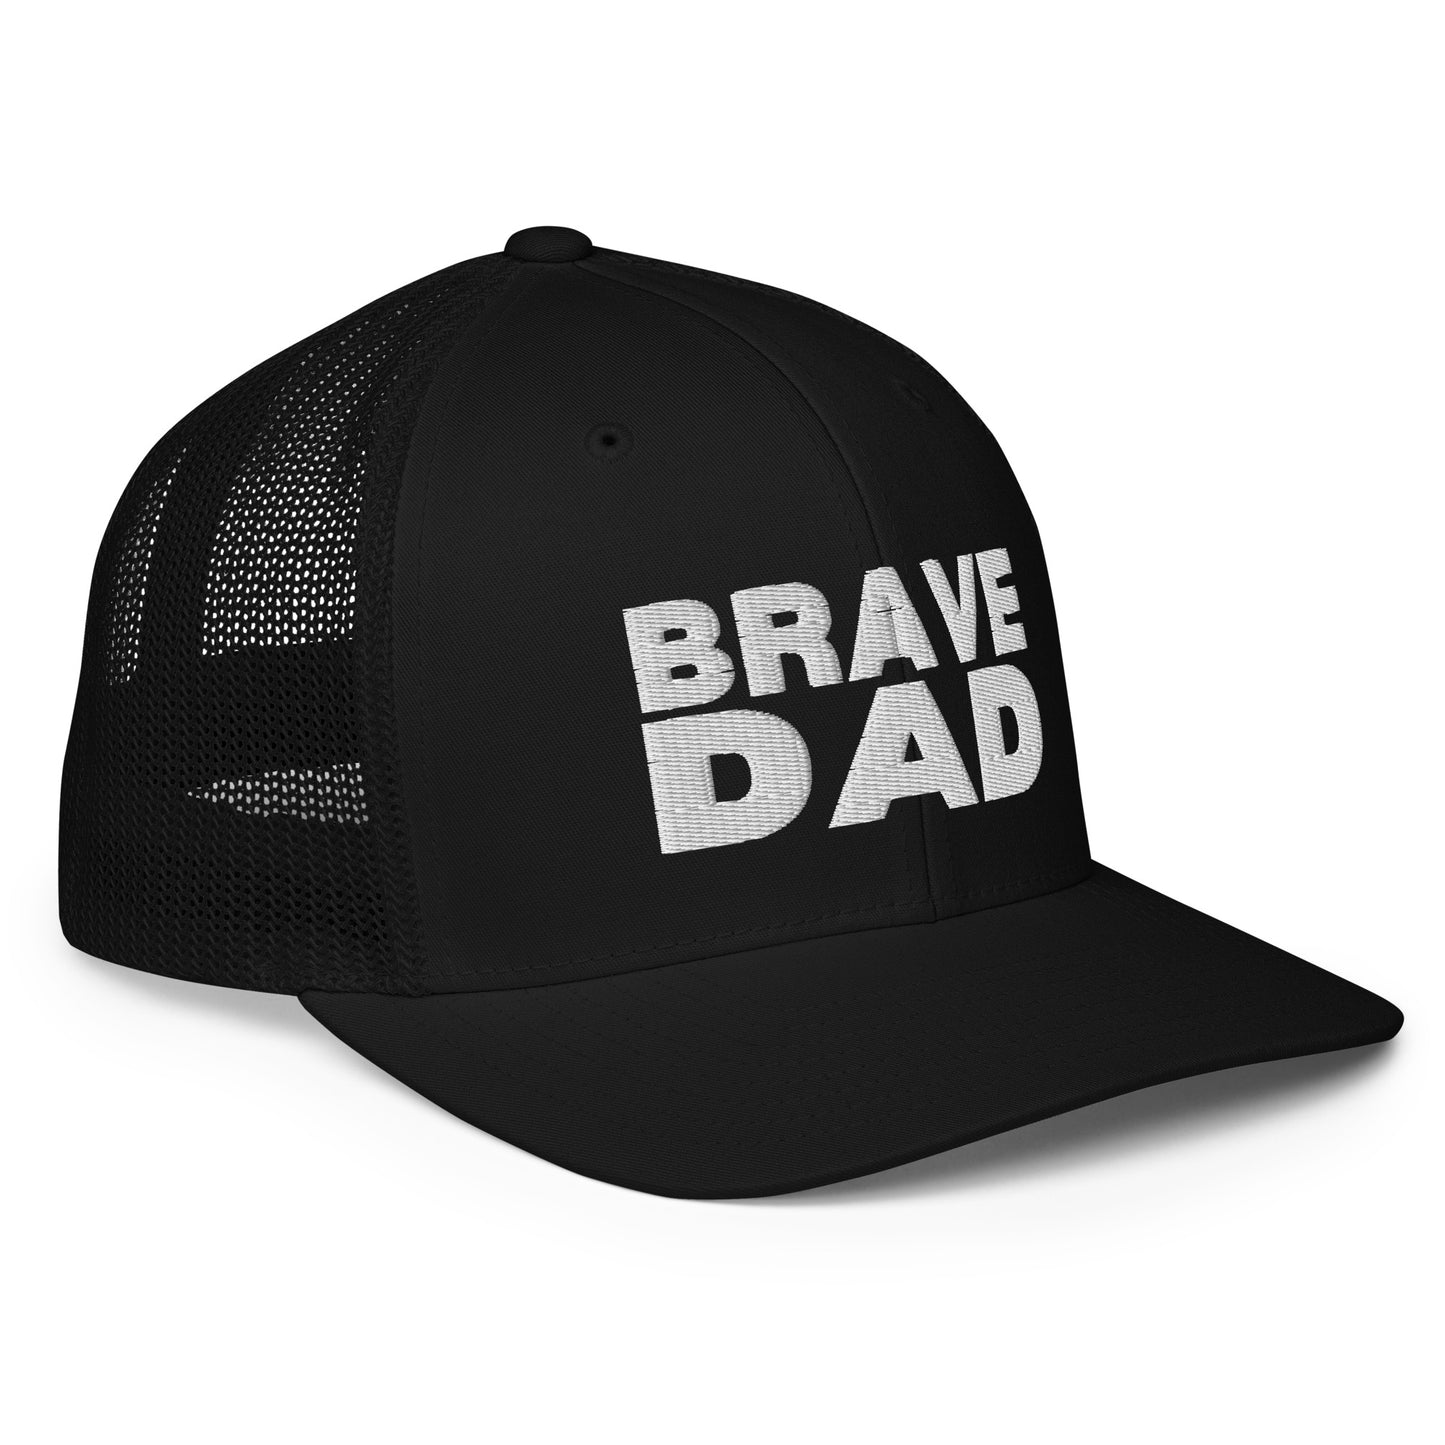 Brave Dad Hat